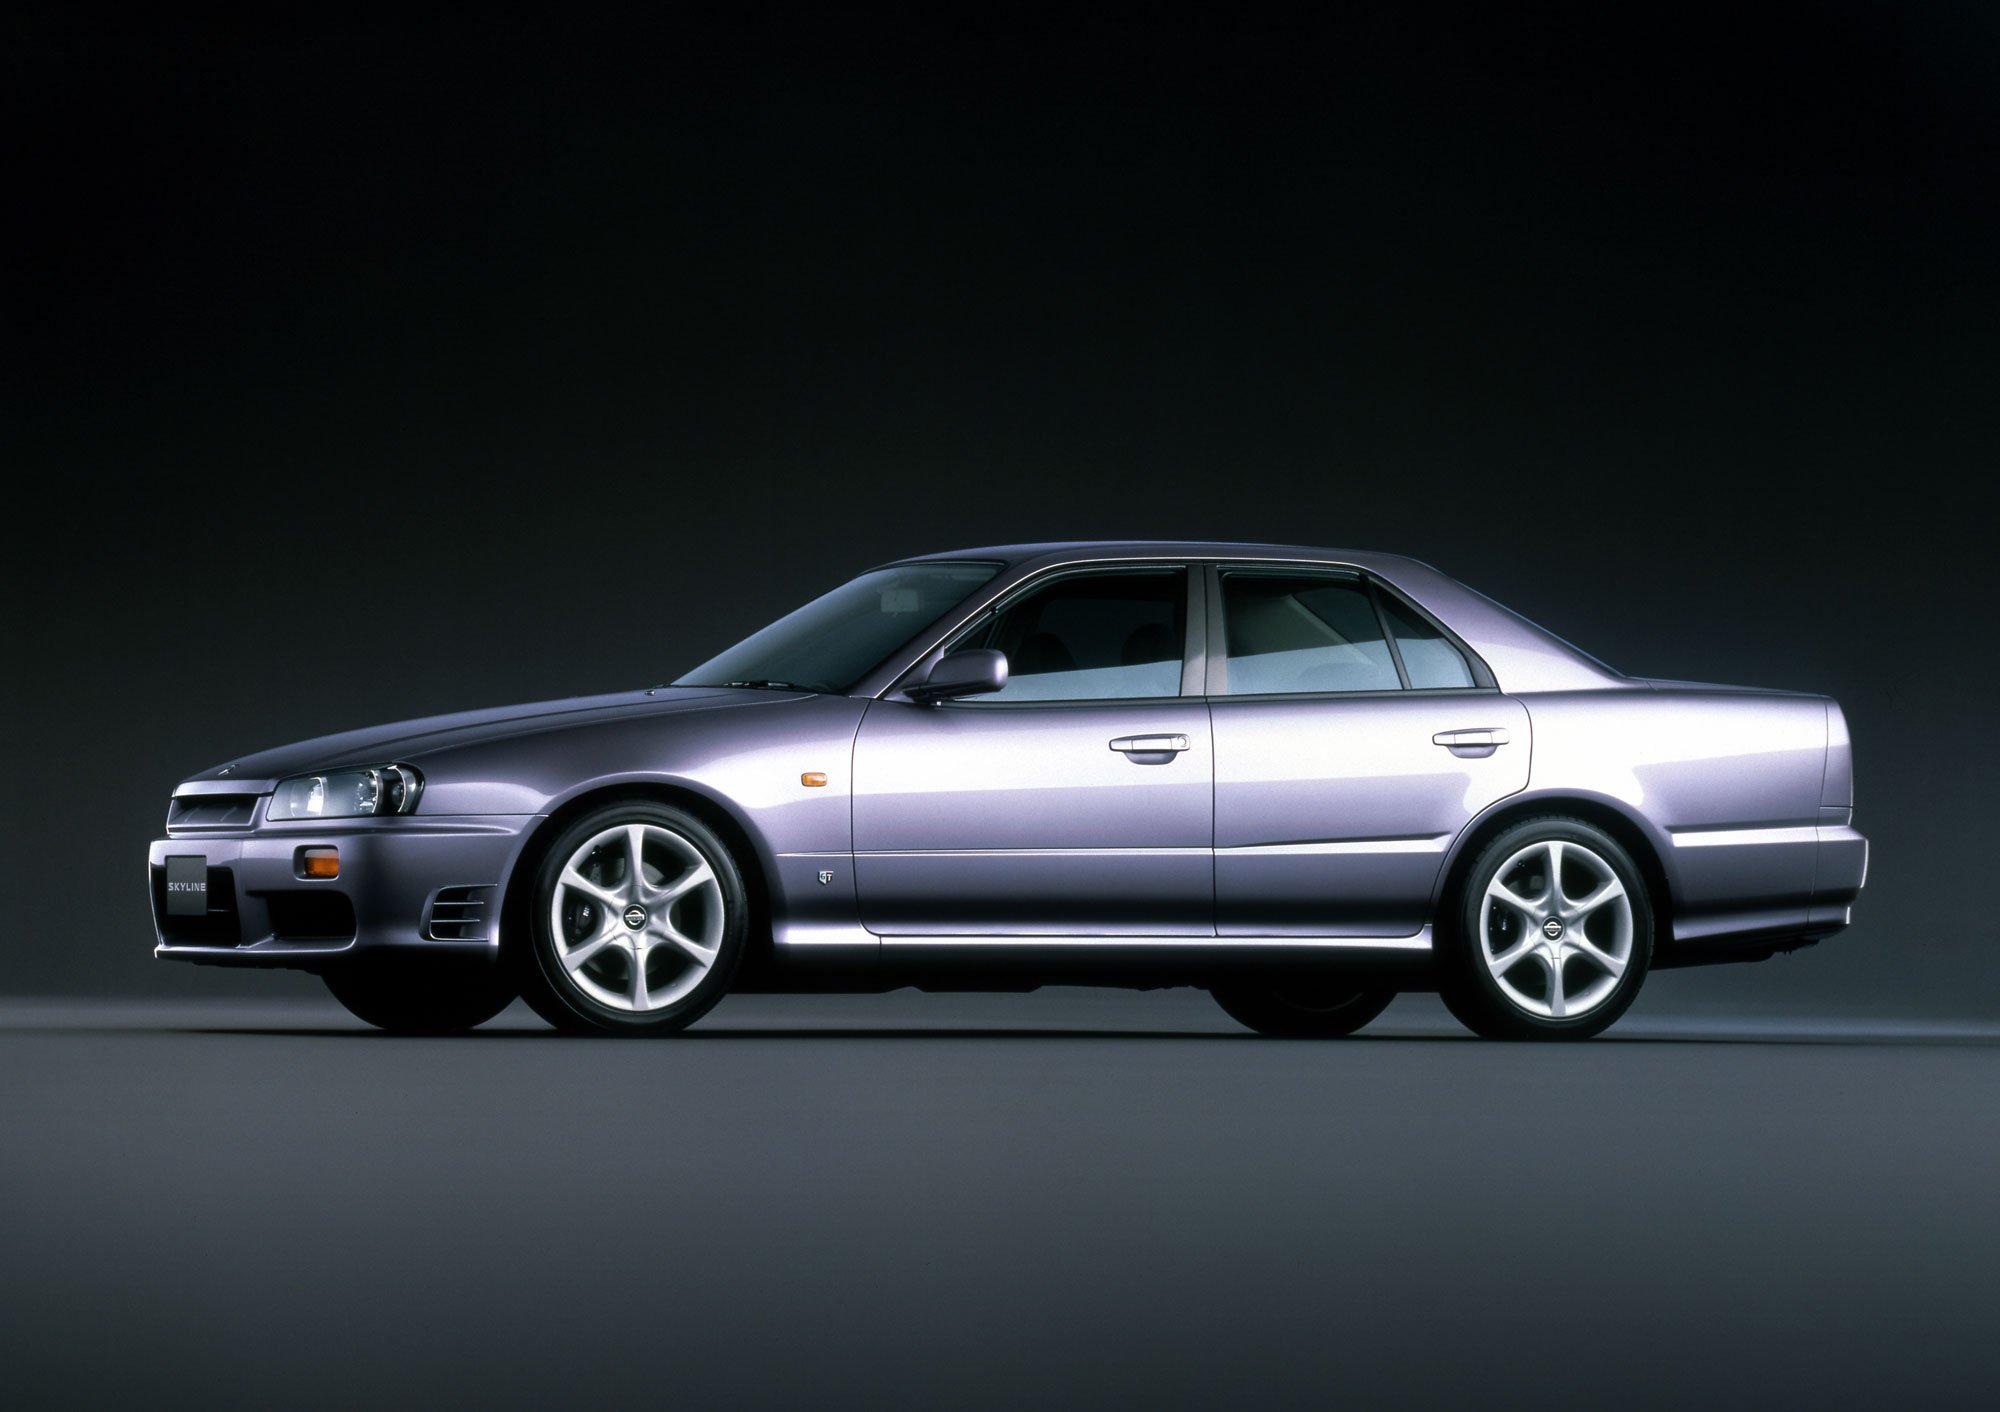 1998, Nissan, Skyline, 25gt x, Turbo, R34, G t Wallpaper